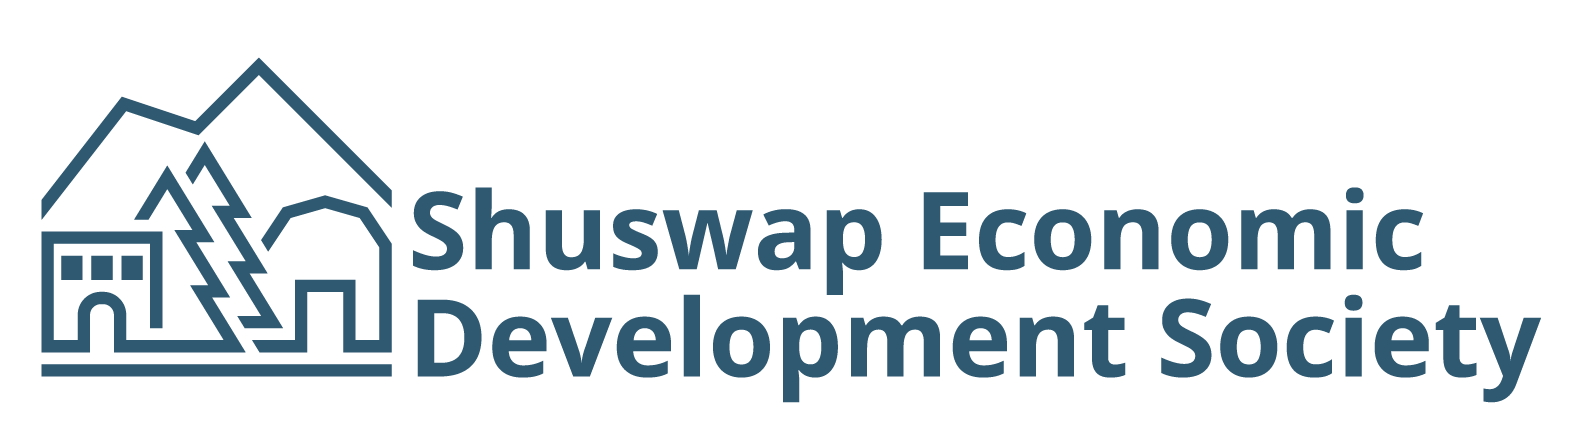 Shuswap Economic Development Society